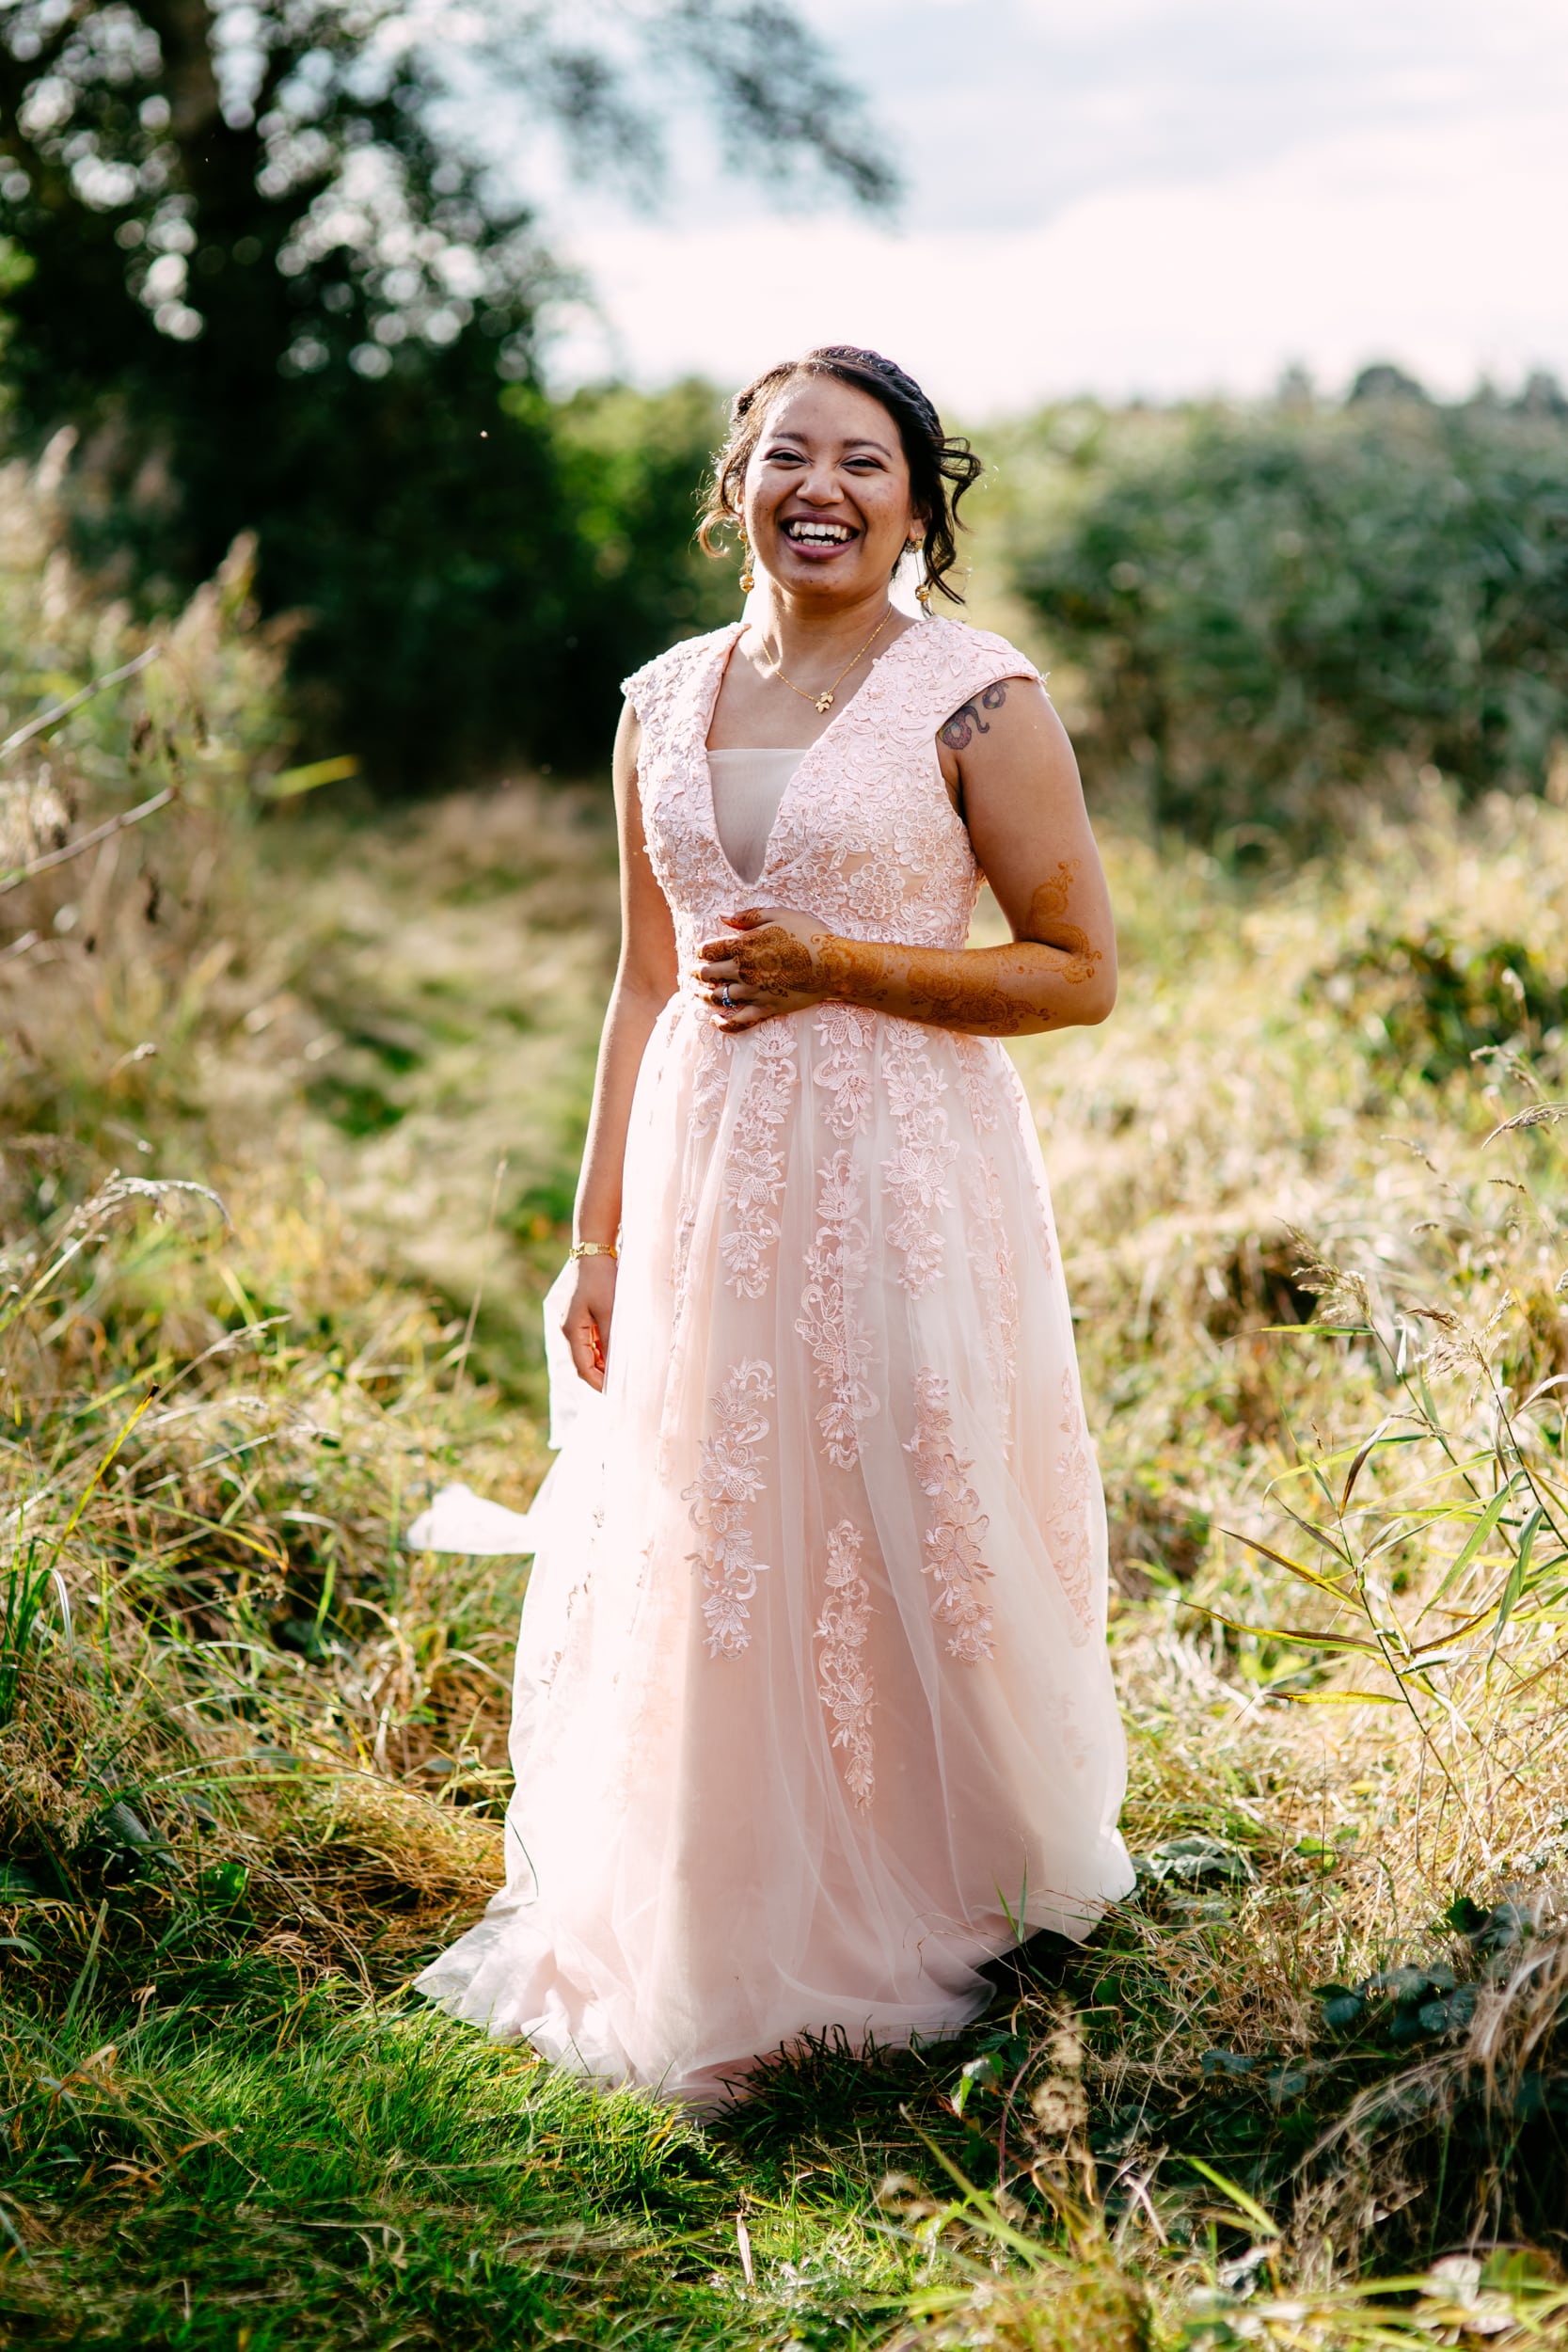 A Bohemian bride in a pink dress standing in a field.